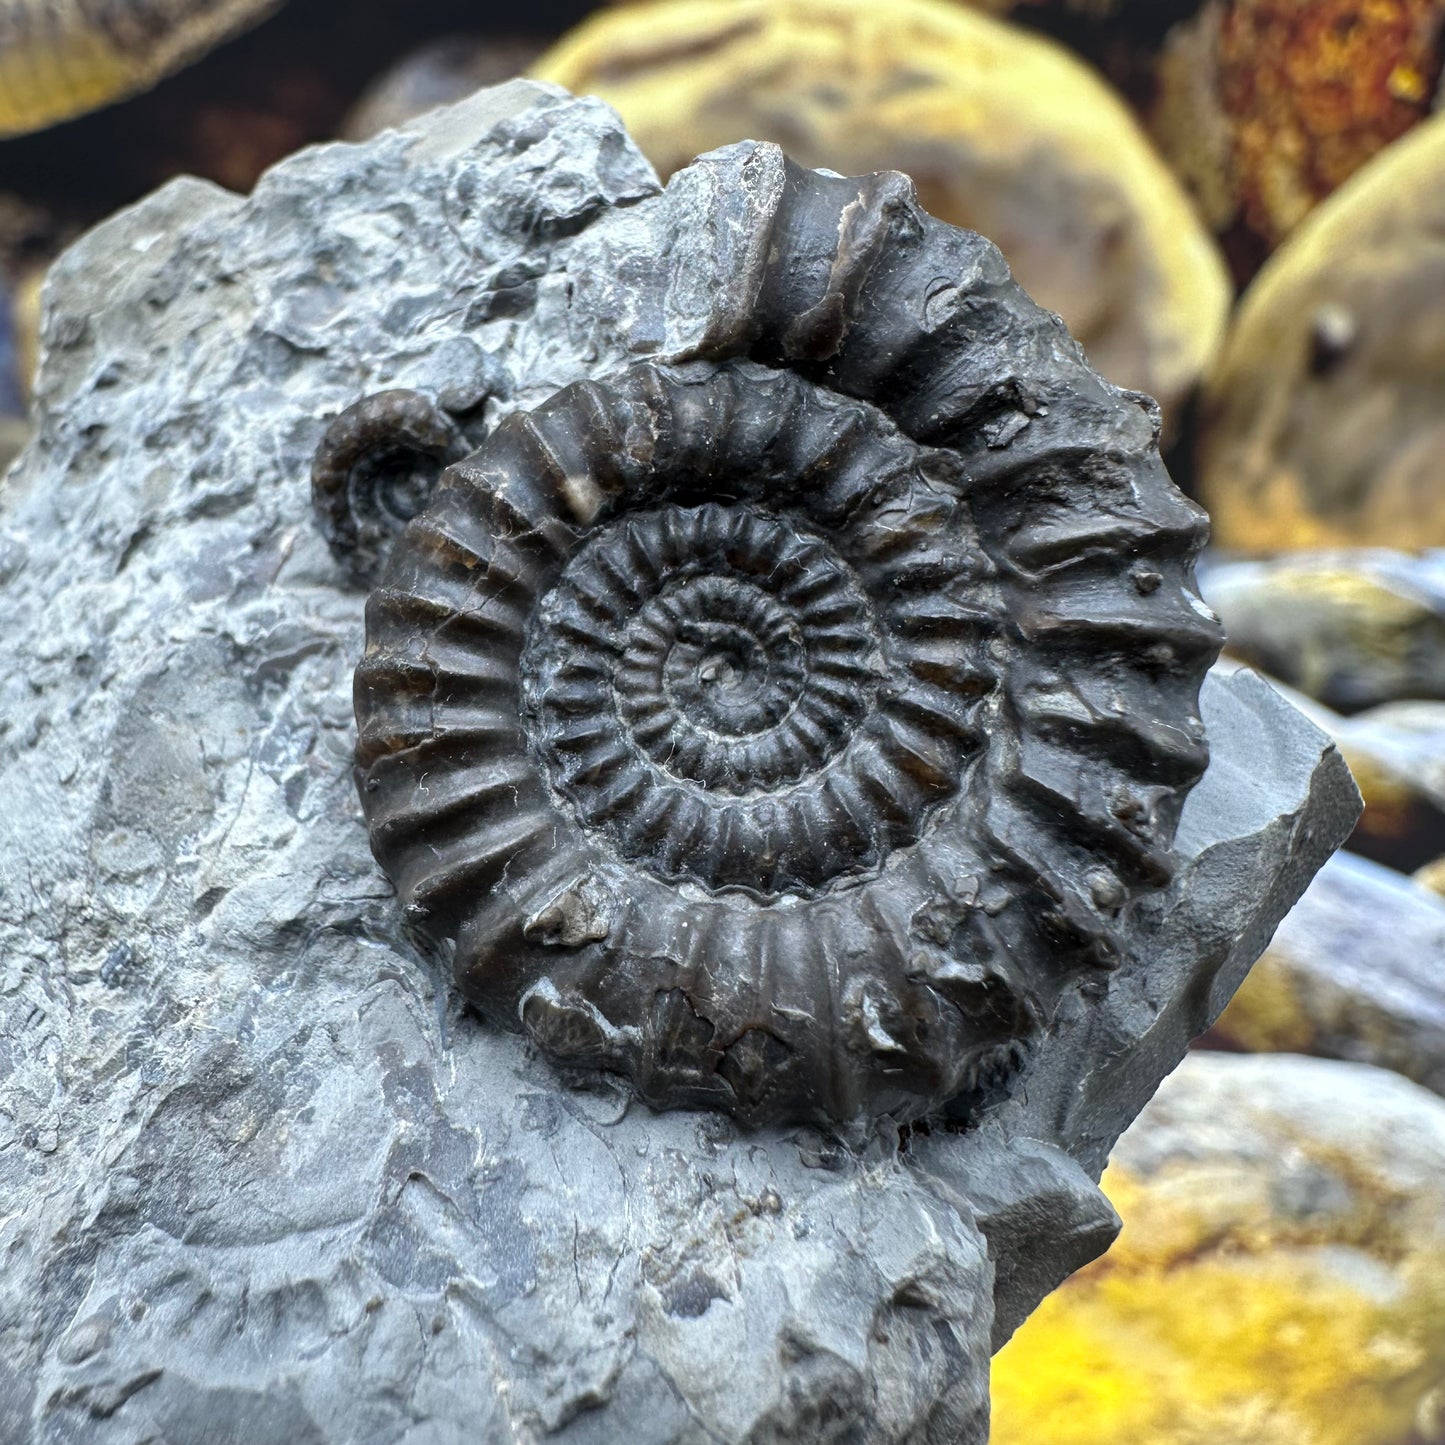 Gagaticeras finitimum ammonite fossil - Whitby, North Yorkshire